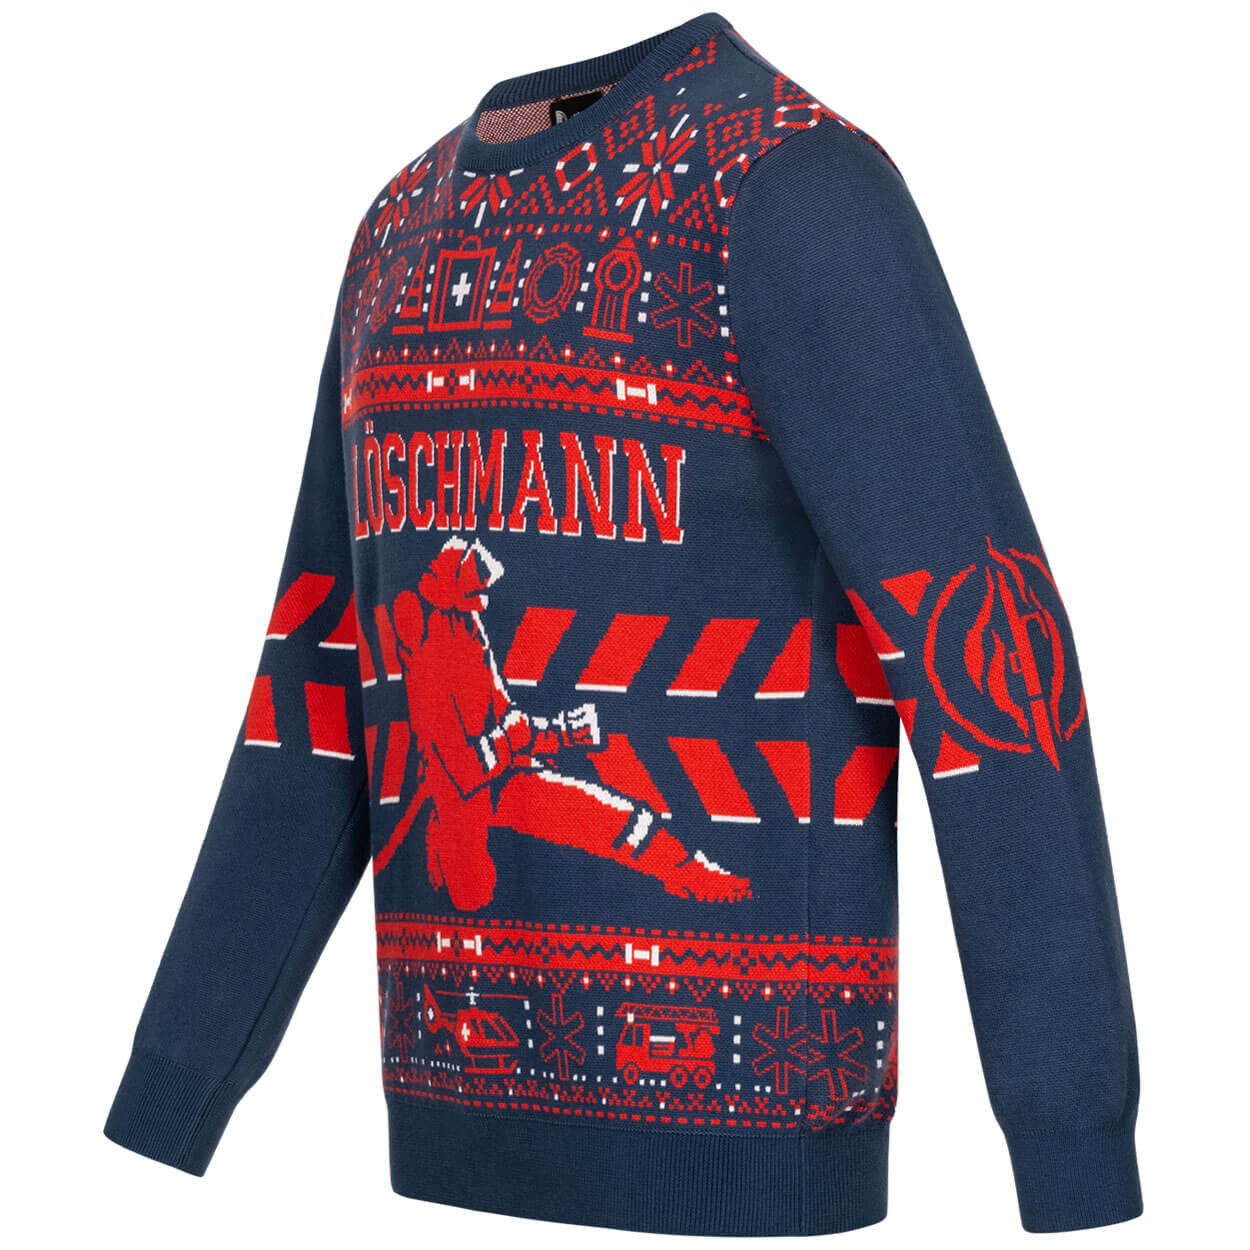 Löschmann - Ugly Sweater Limited Christmas Edition